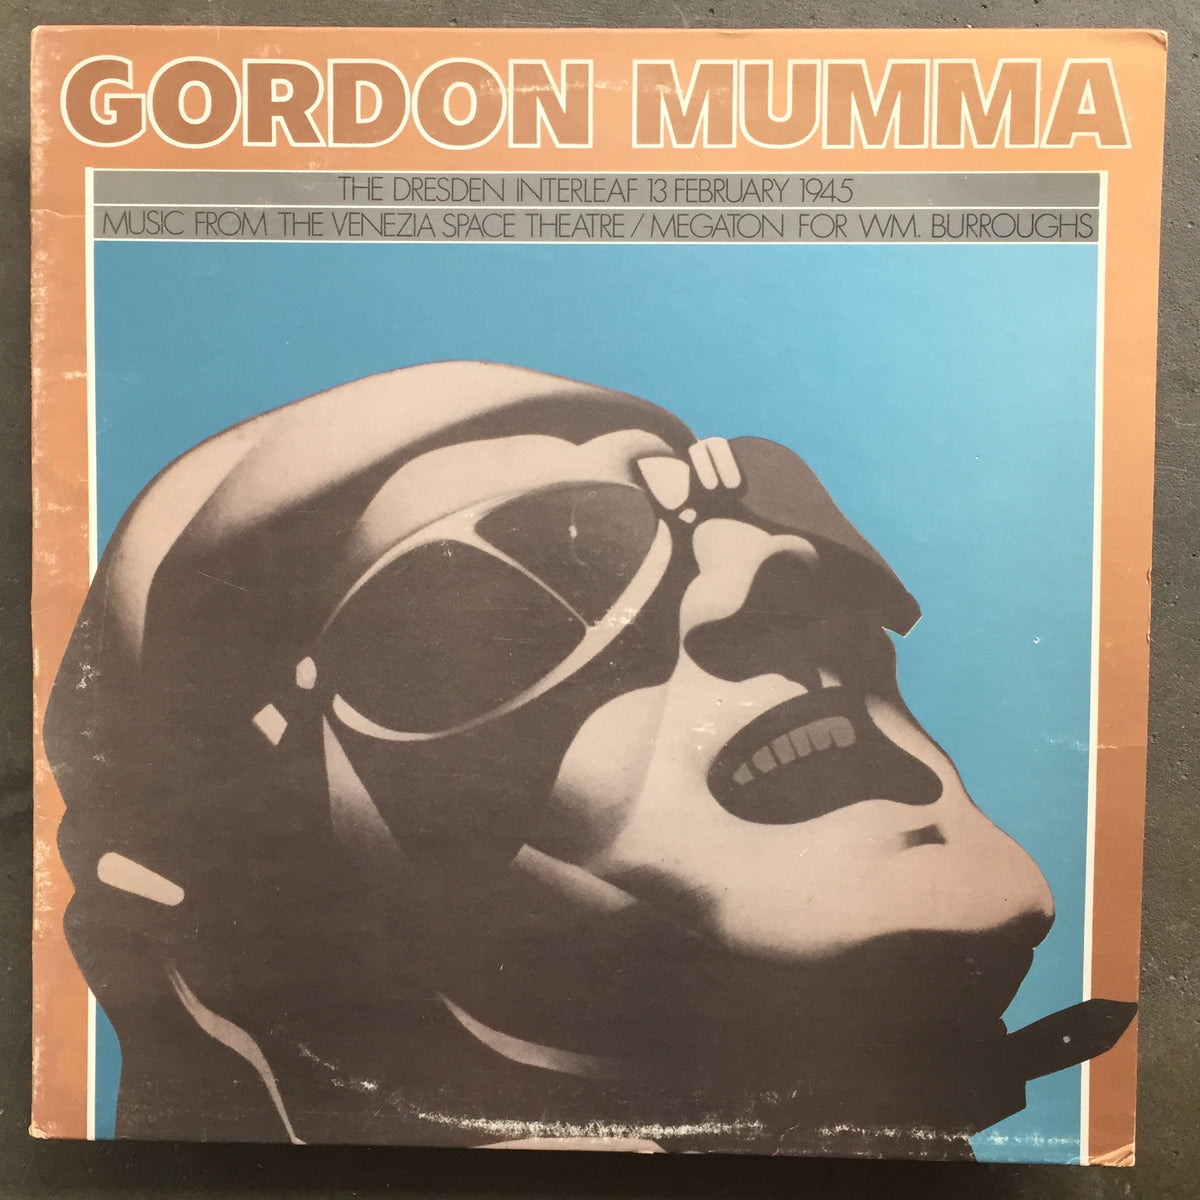 Gordon Mumma – Dresden Venezia Megaton – All Night Flight Records